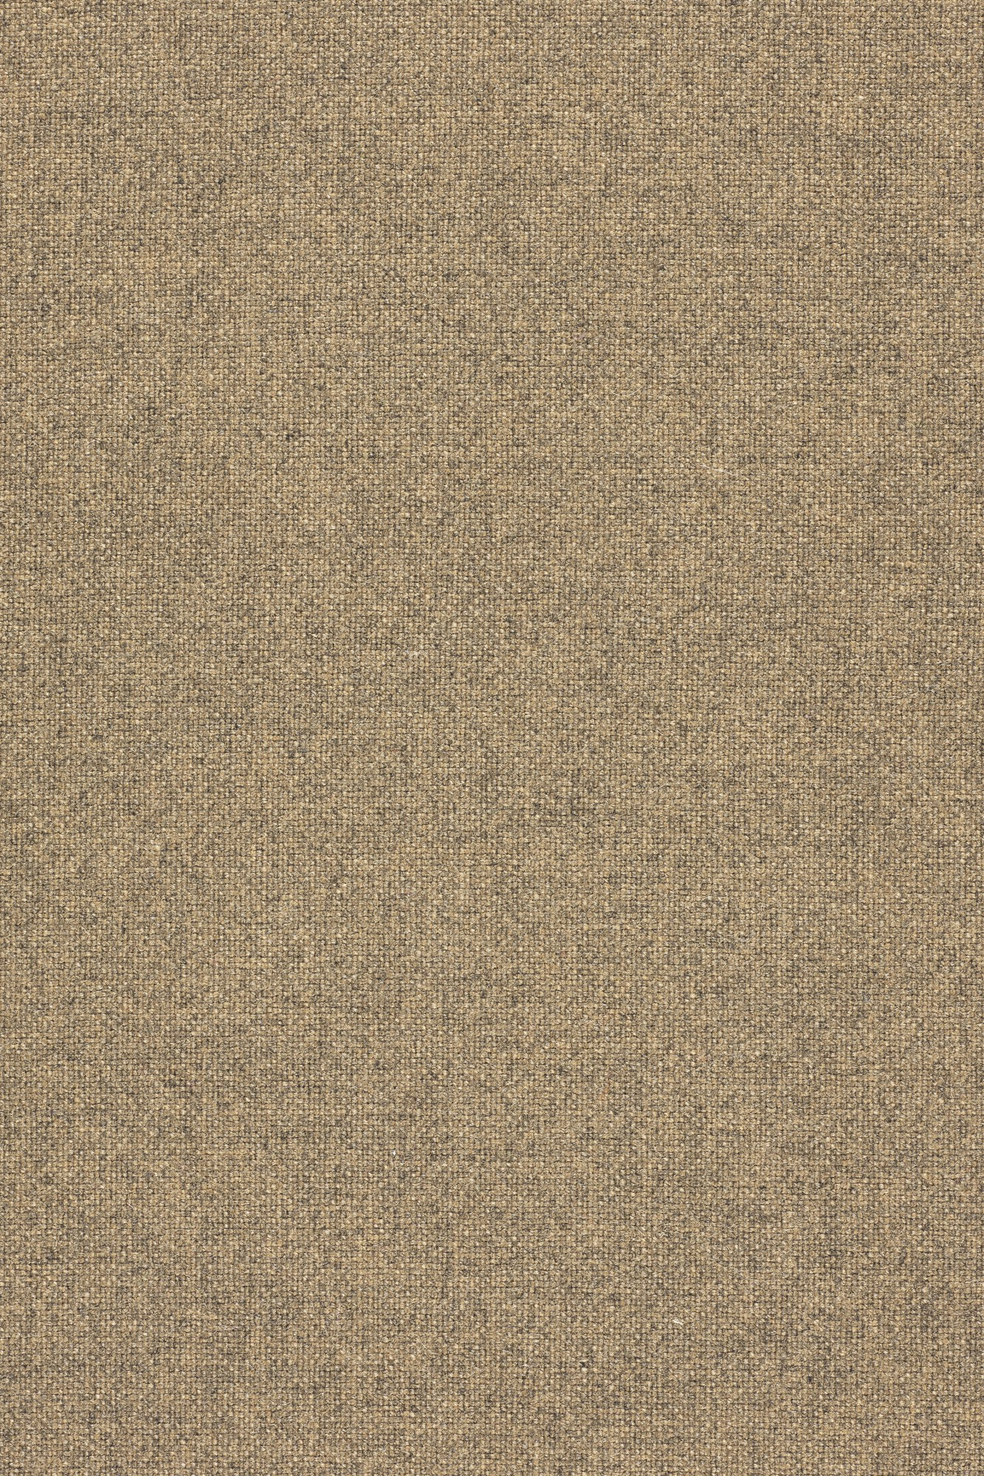 Fabric sample Tonica 2 353 brown